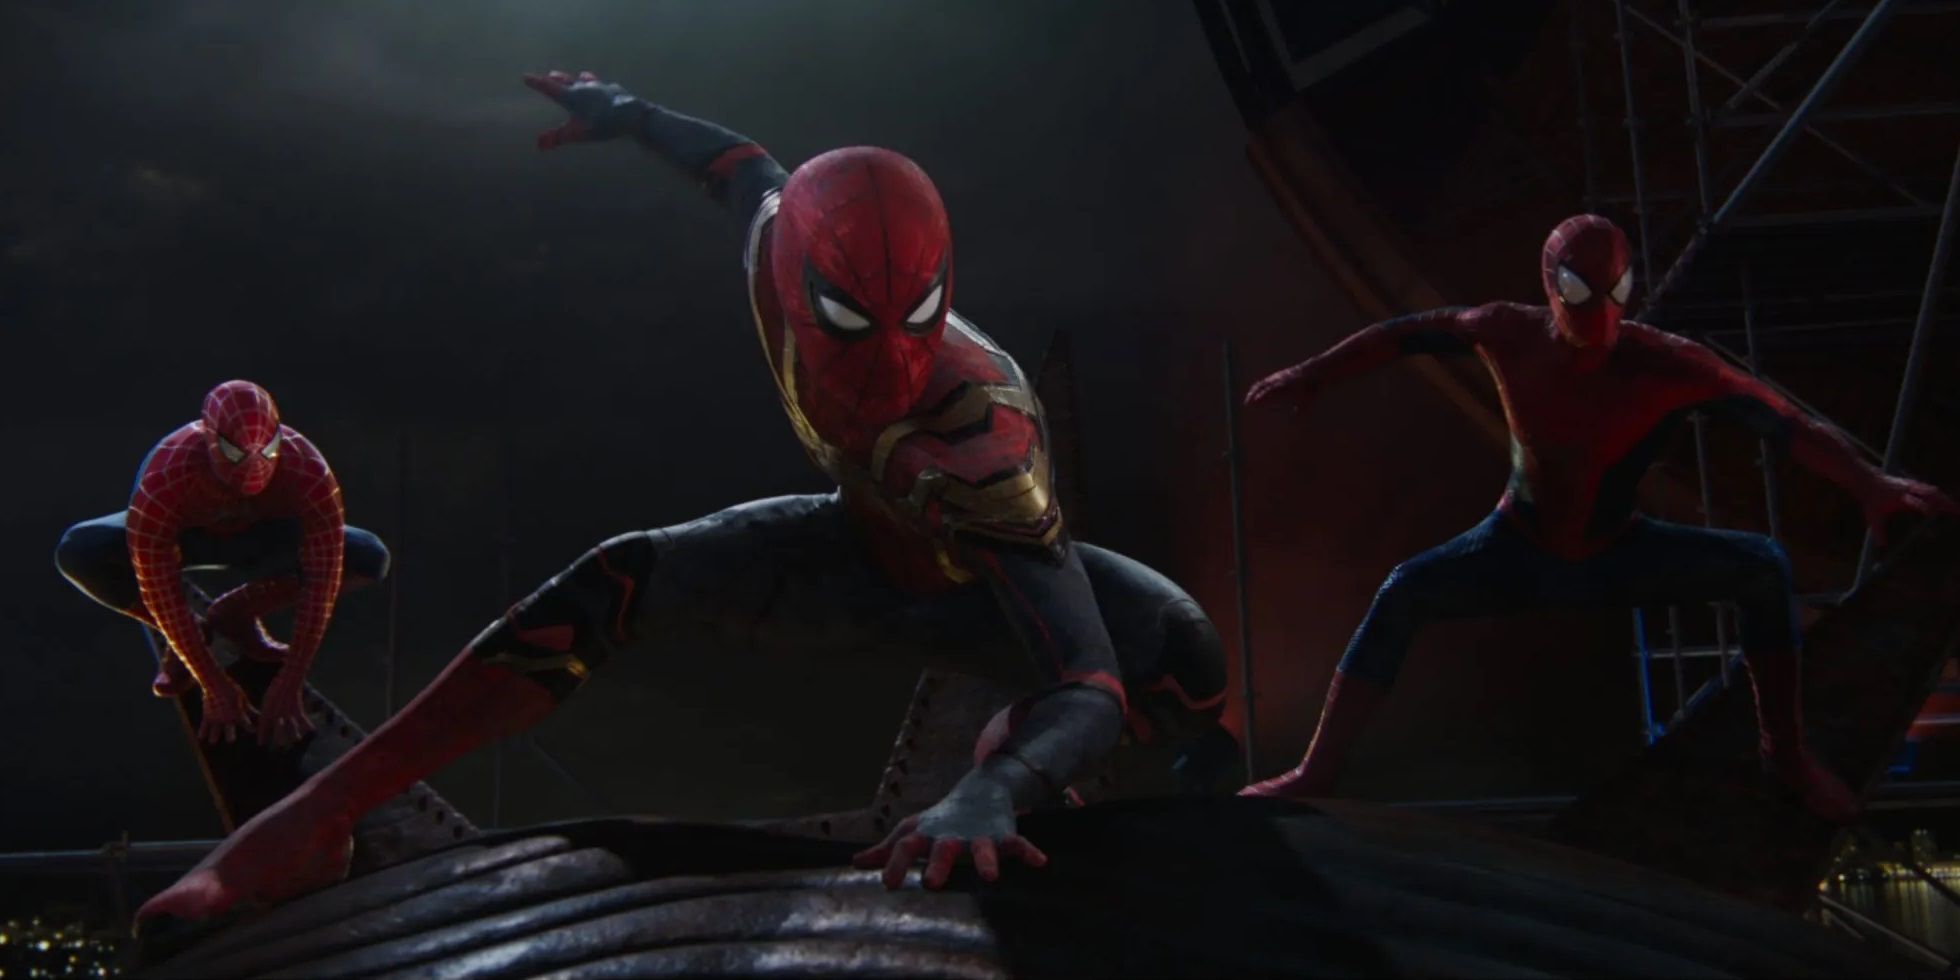 The three Spider-Men prepare for battle in No Way Home